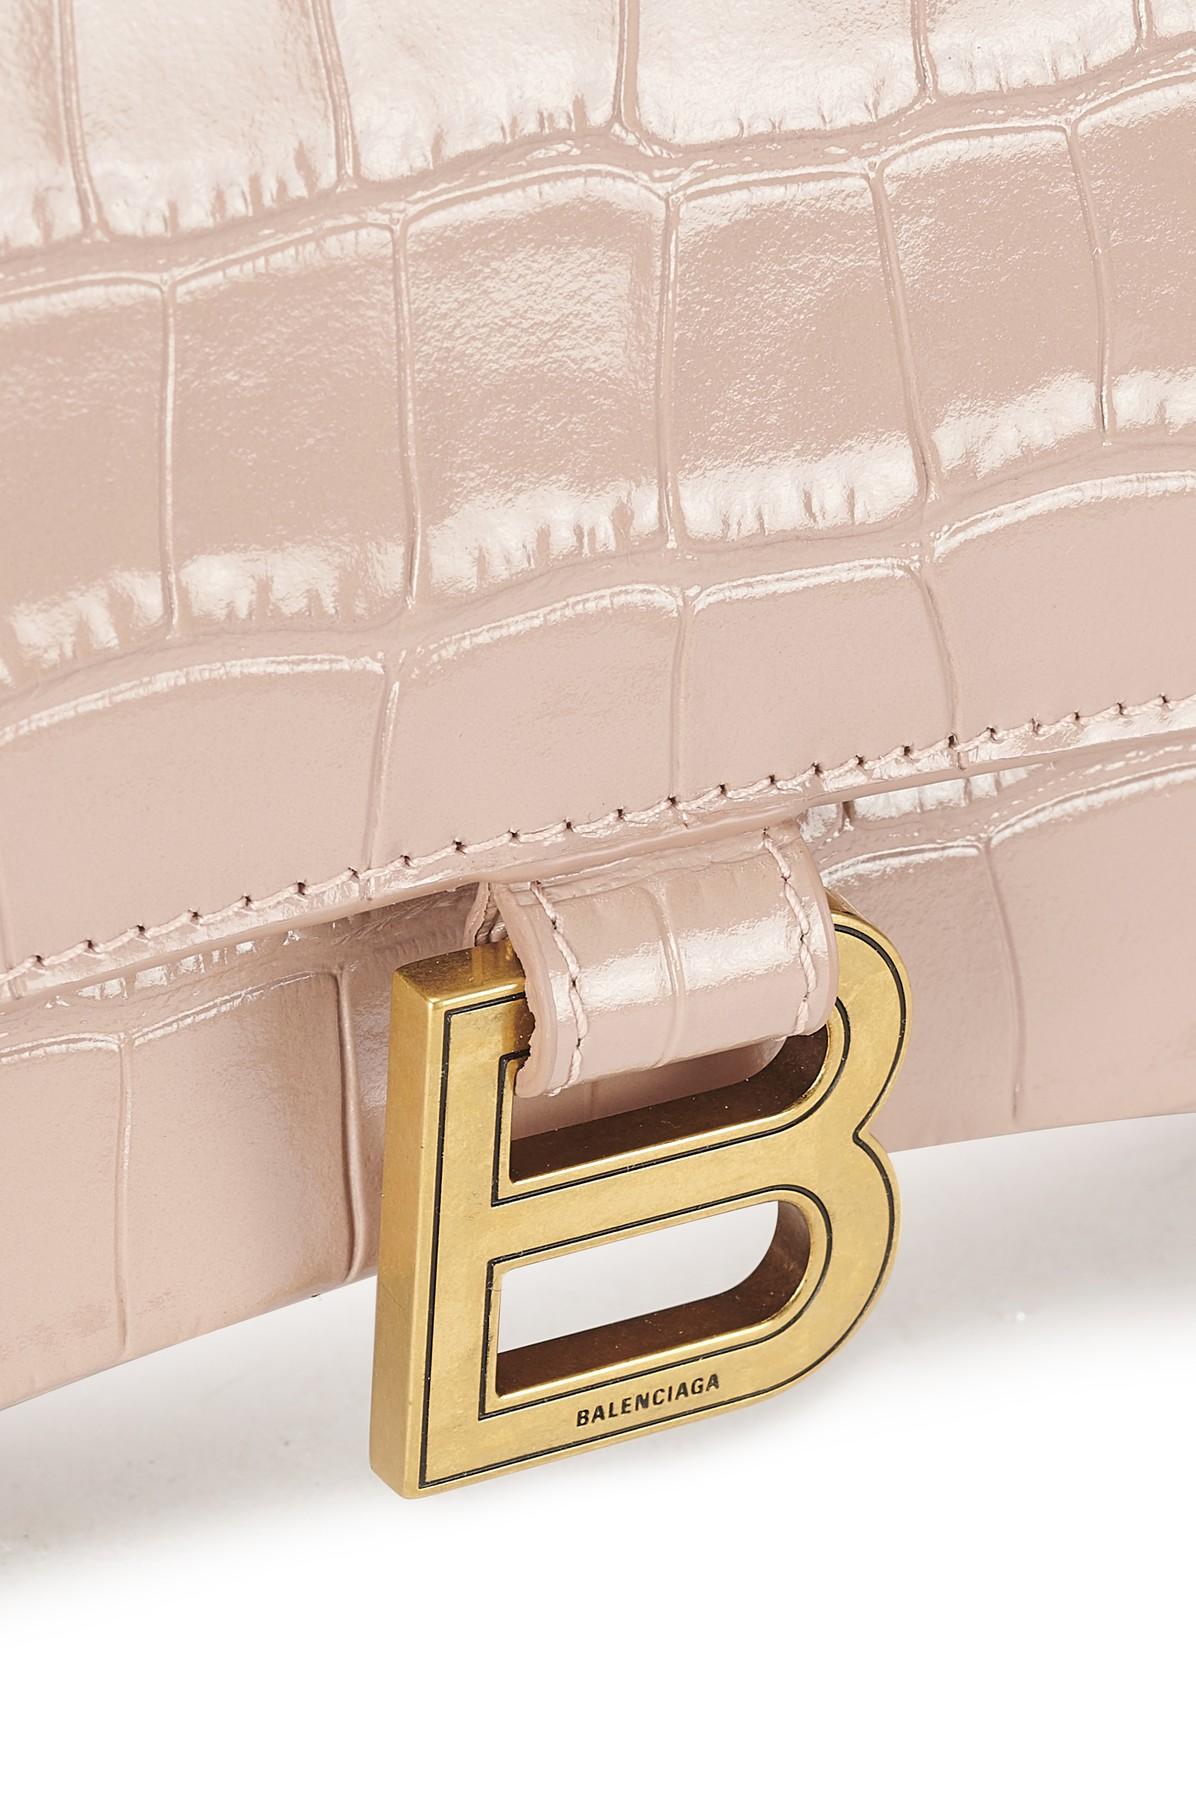 Balenciaga Hourglass Small Top Handle Bag in Natural